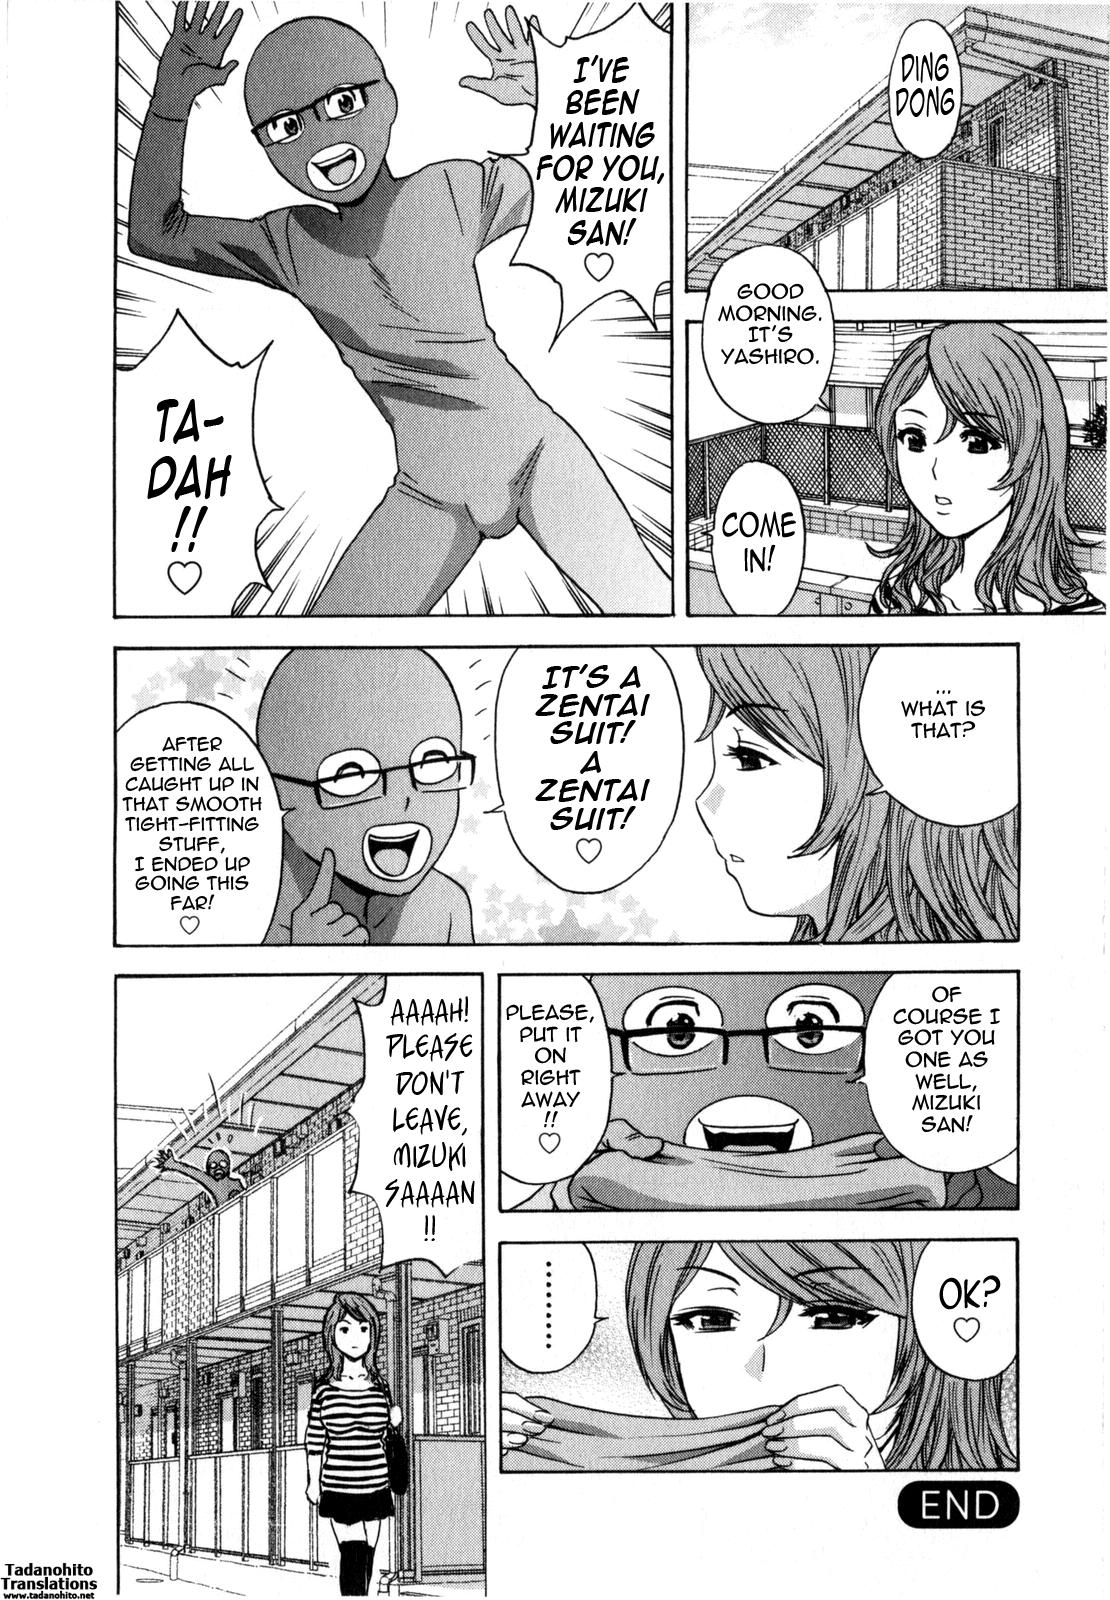 [Hidemaru] Life with Married Women Just Like a Manga 2 - Ch. 1-6 [English] {Tadanohito} 104